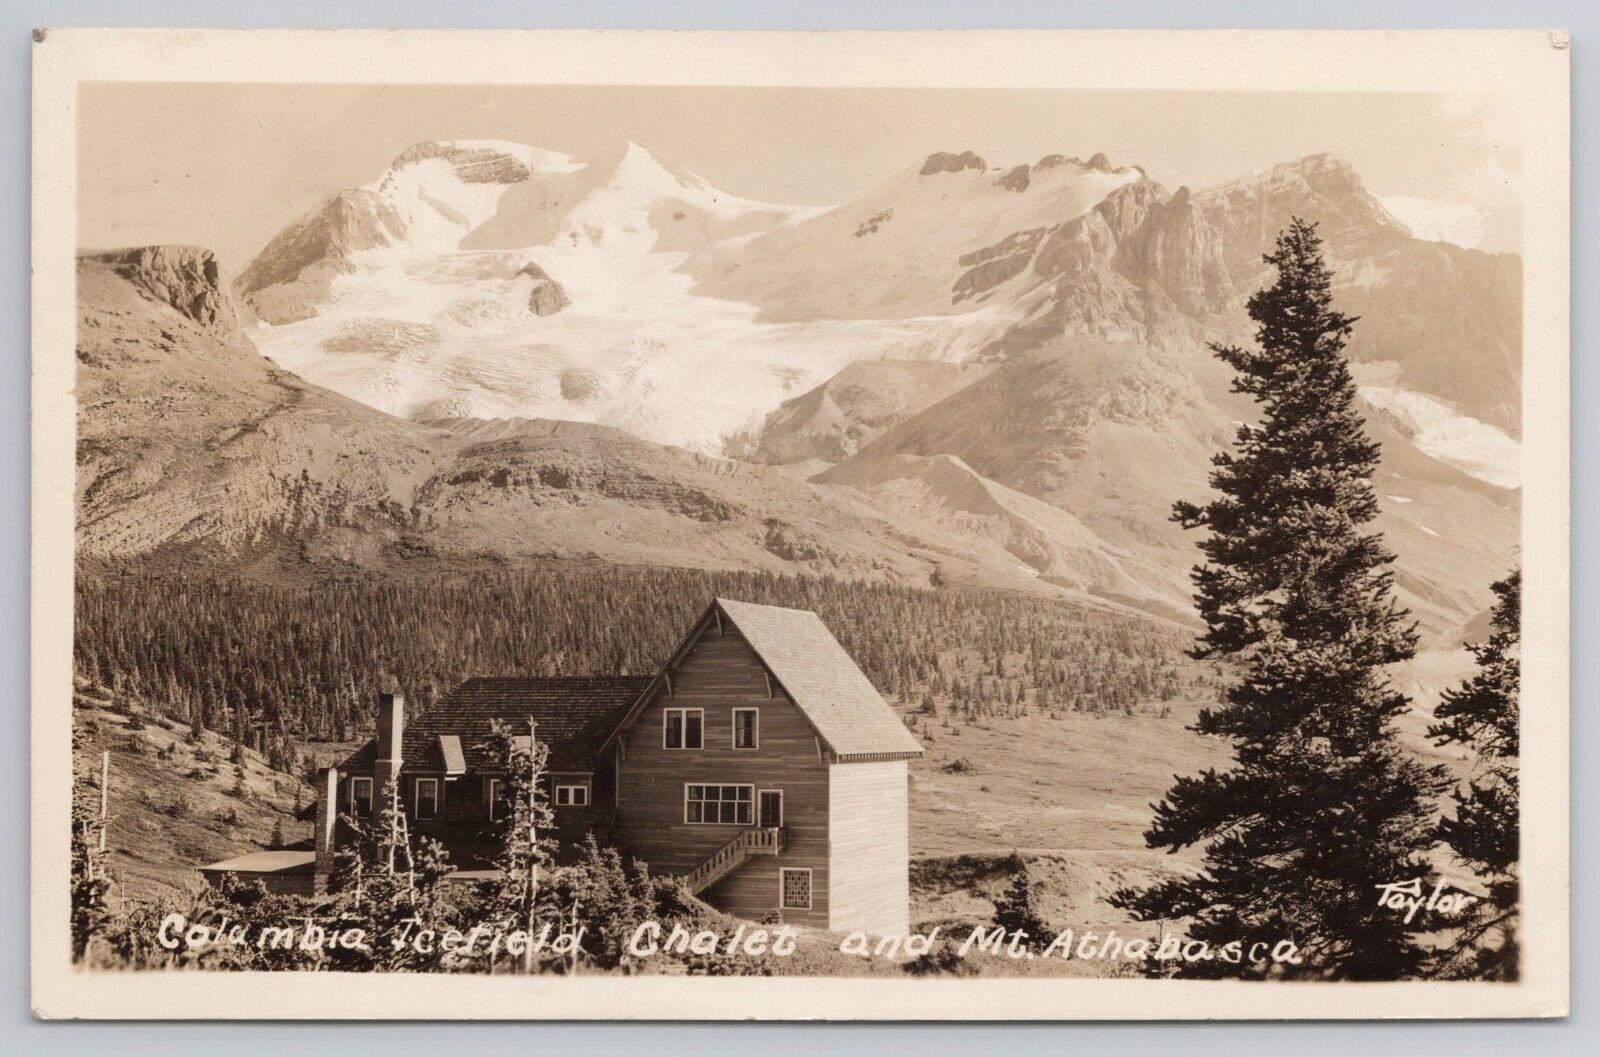 RPPC Columbia Icefield Chalet Mt Athabasca 1940 Real Photo Postcard Banff Jasper